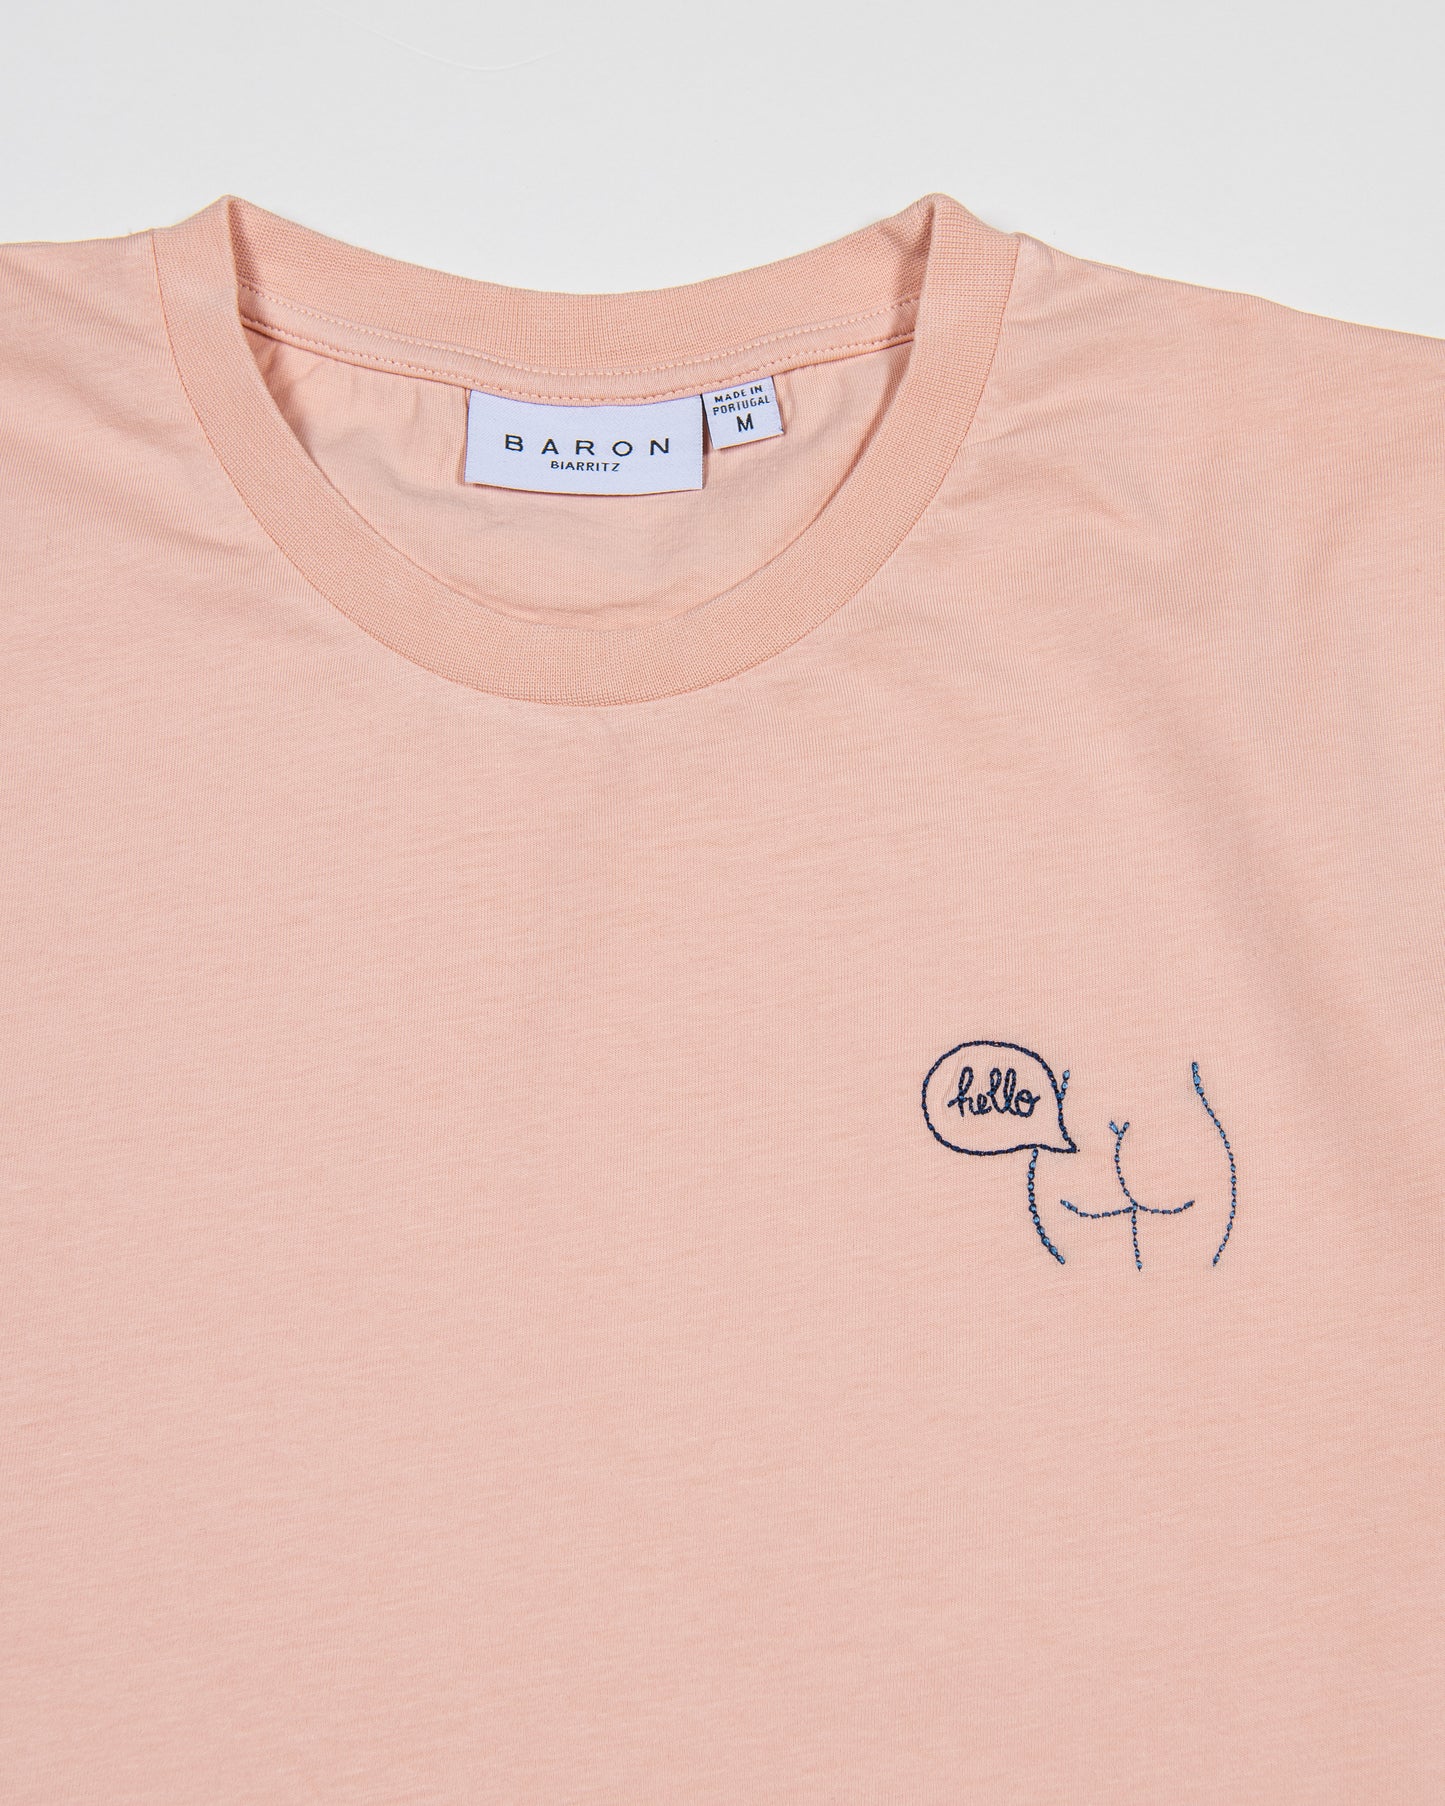 Tee-shirt Coton bio HELLO - Rose pastel